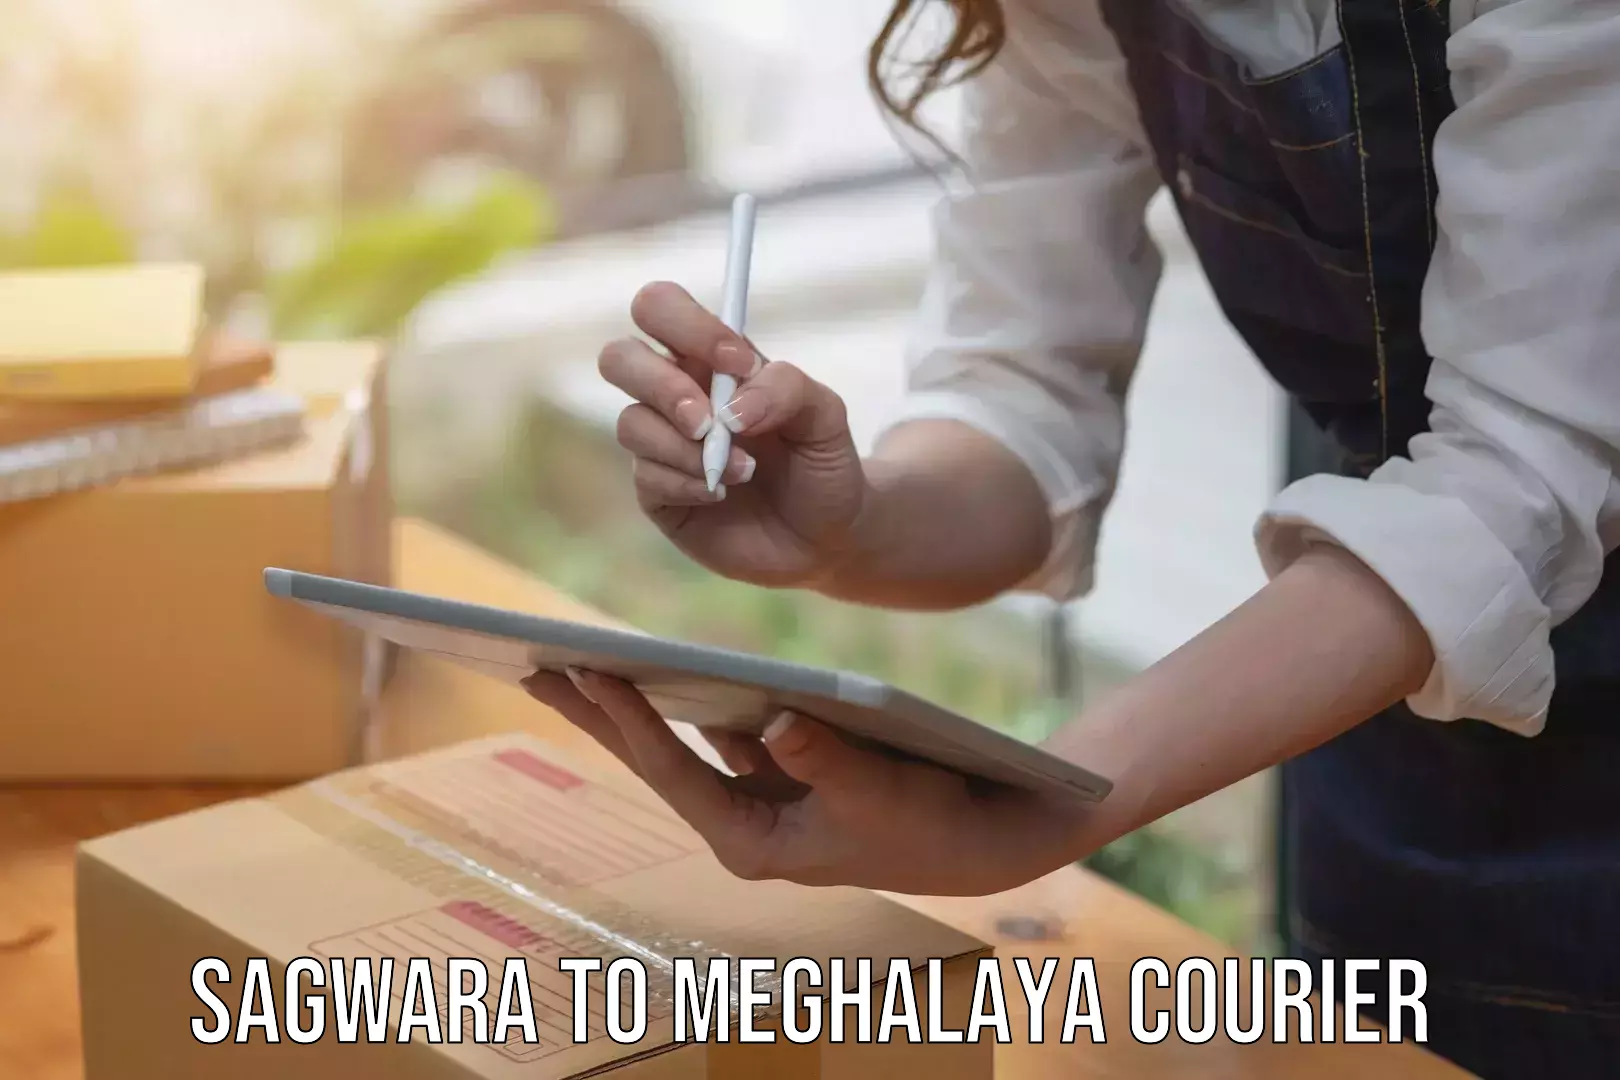 Digital courier platforms Sagwara to Dkhiah West